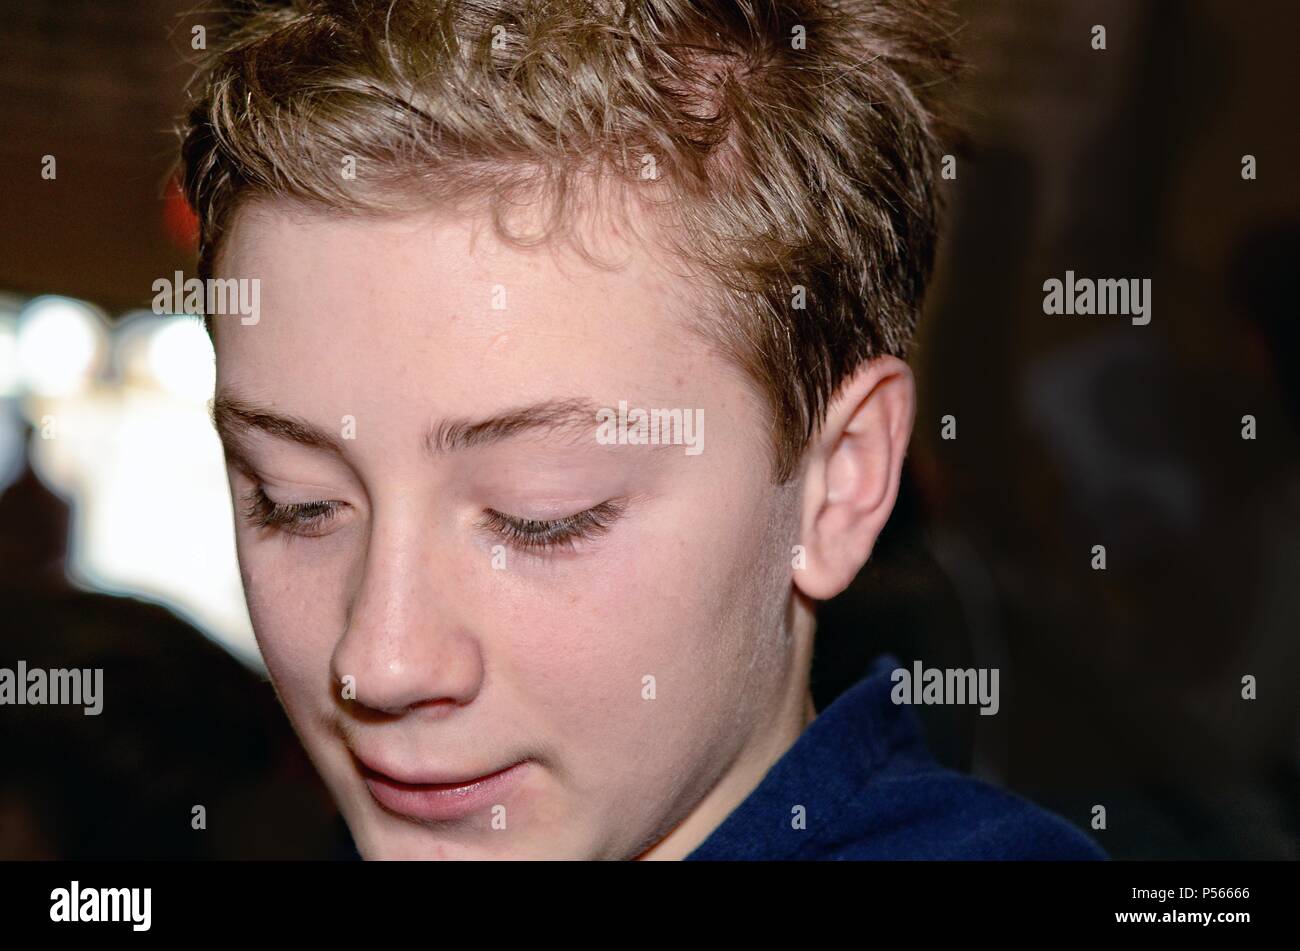 Young Teenage Boy Portrait Stock Photo